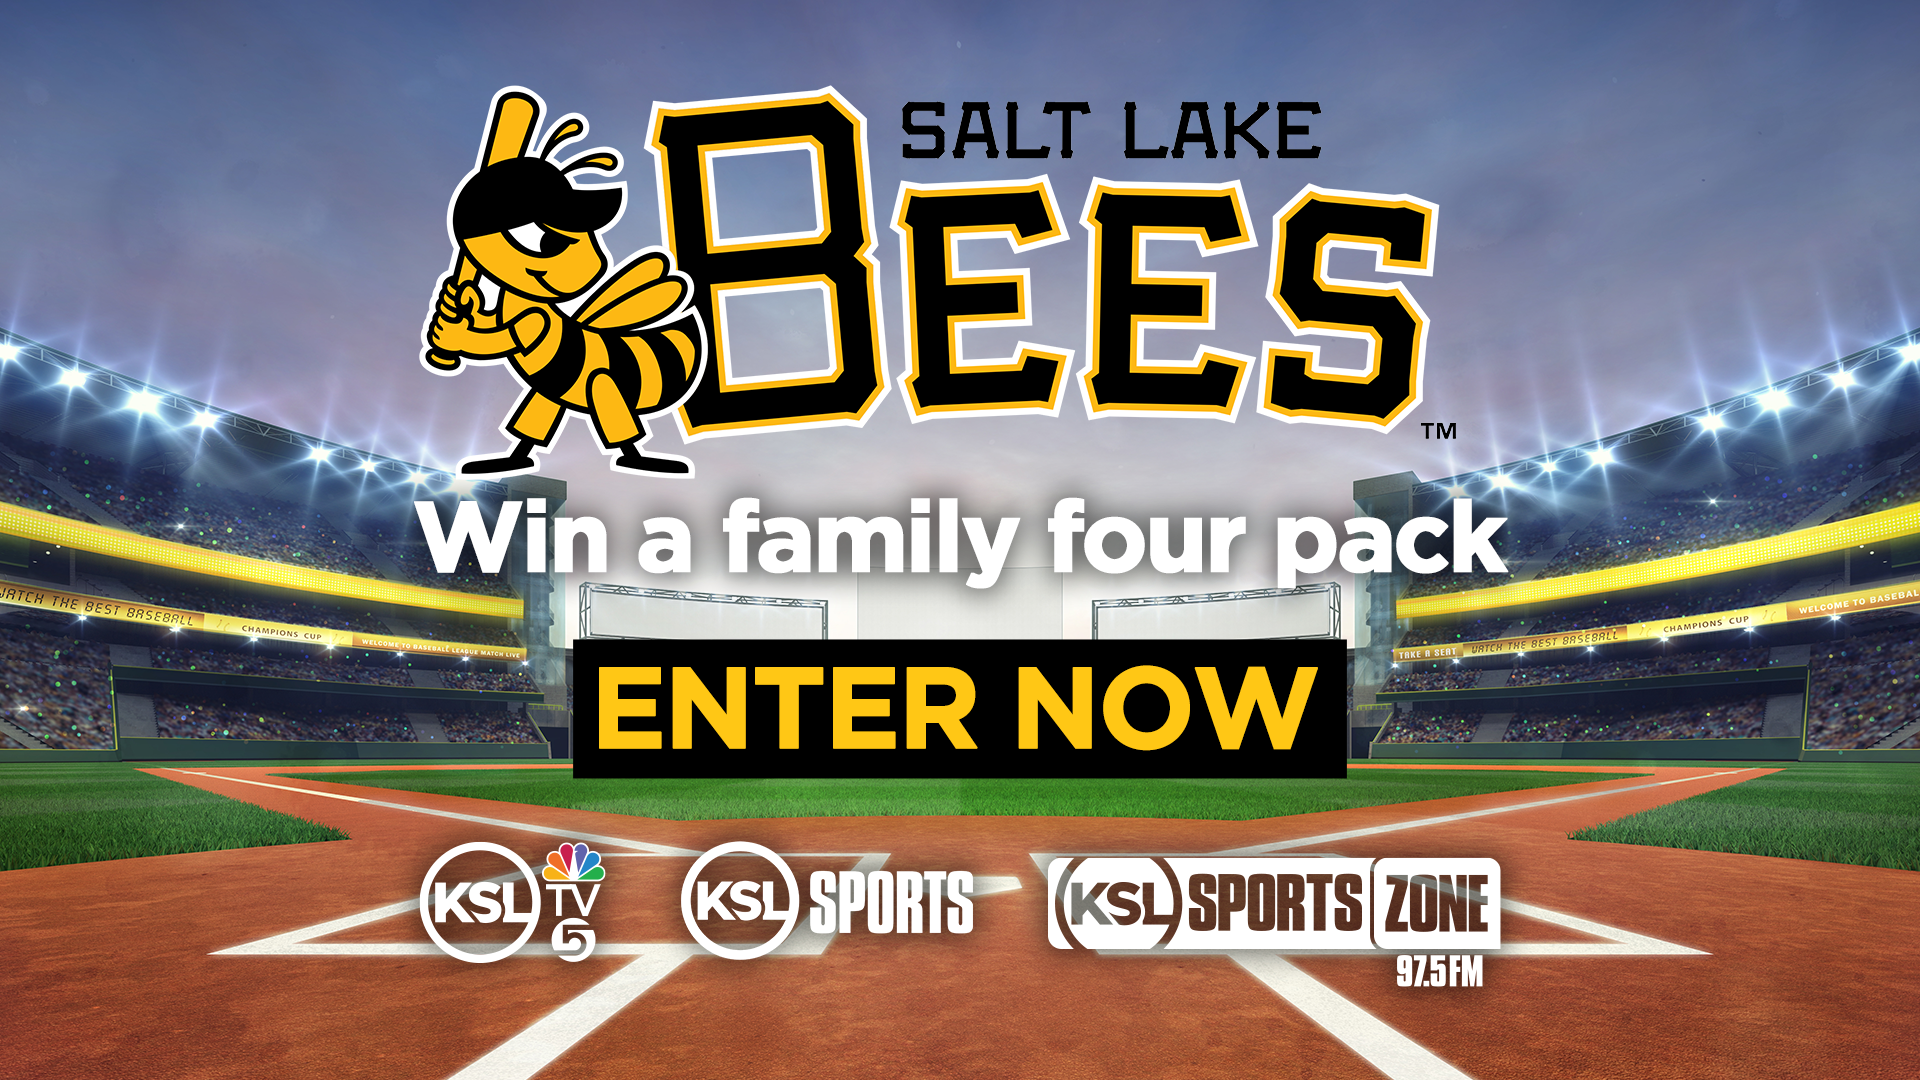 Salt Lake Bees Contest